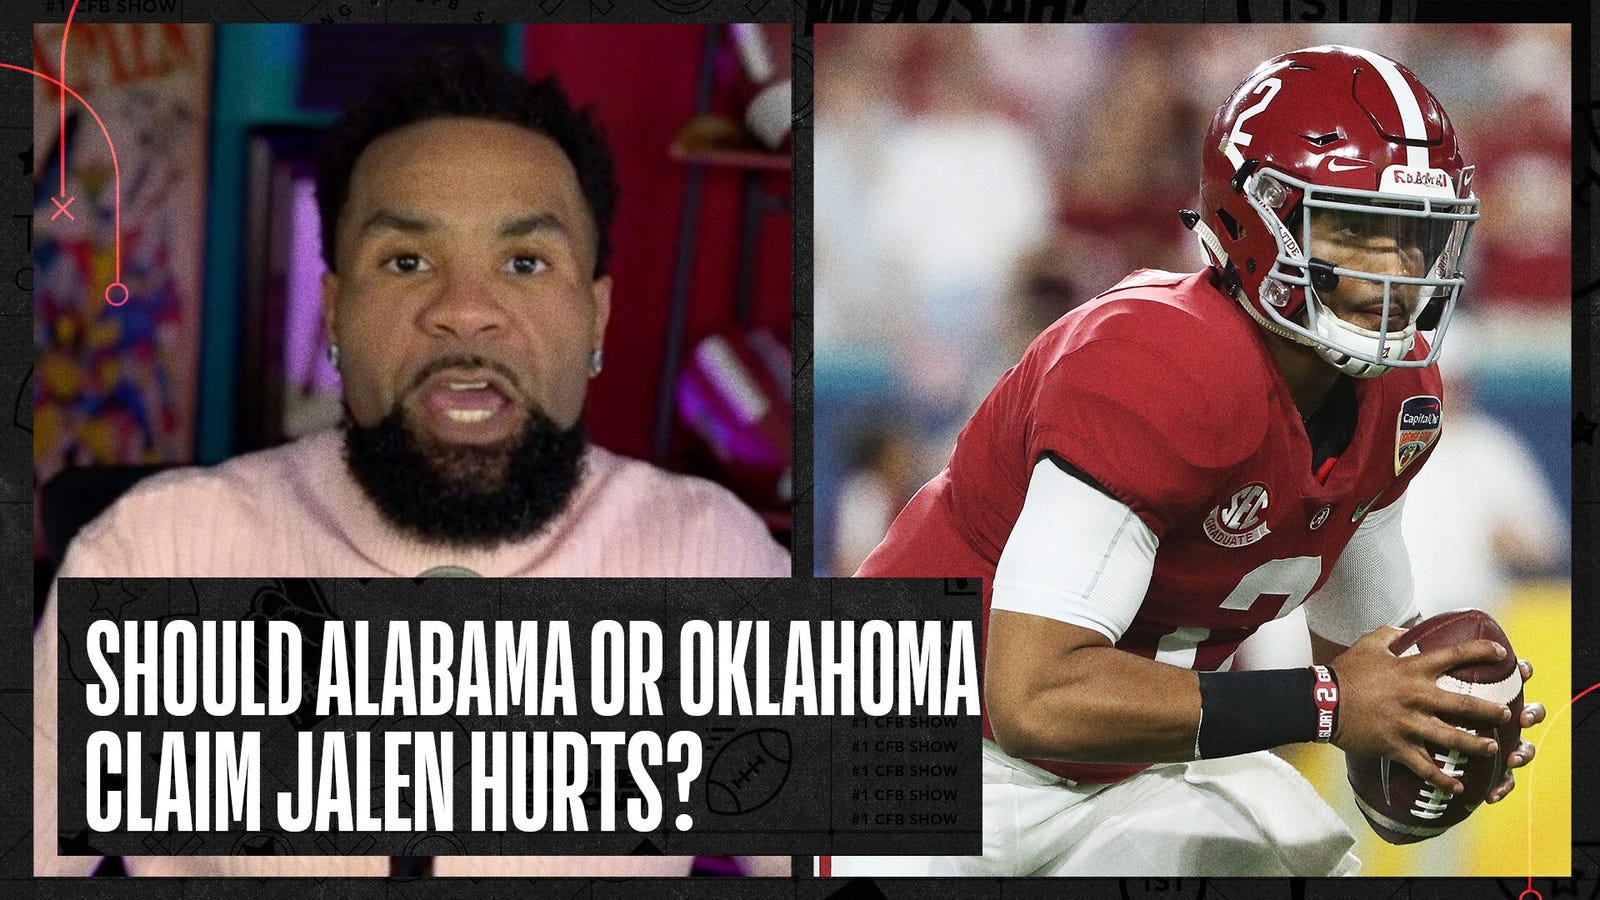 Alabama or Oklahoma: Who Can Claim Jalen Hurts?